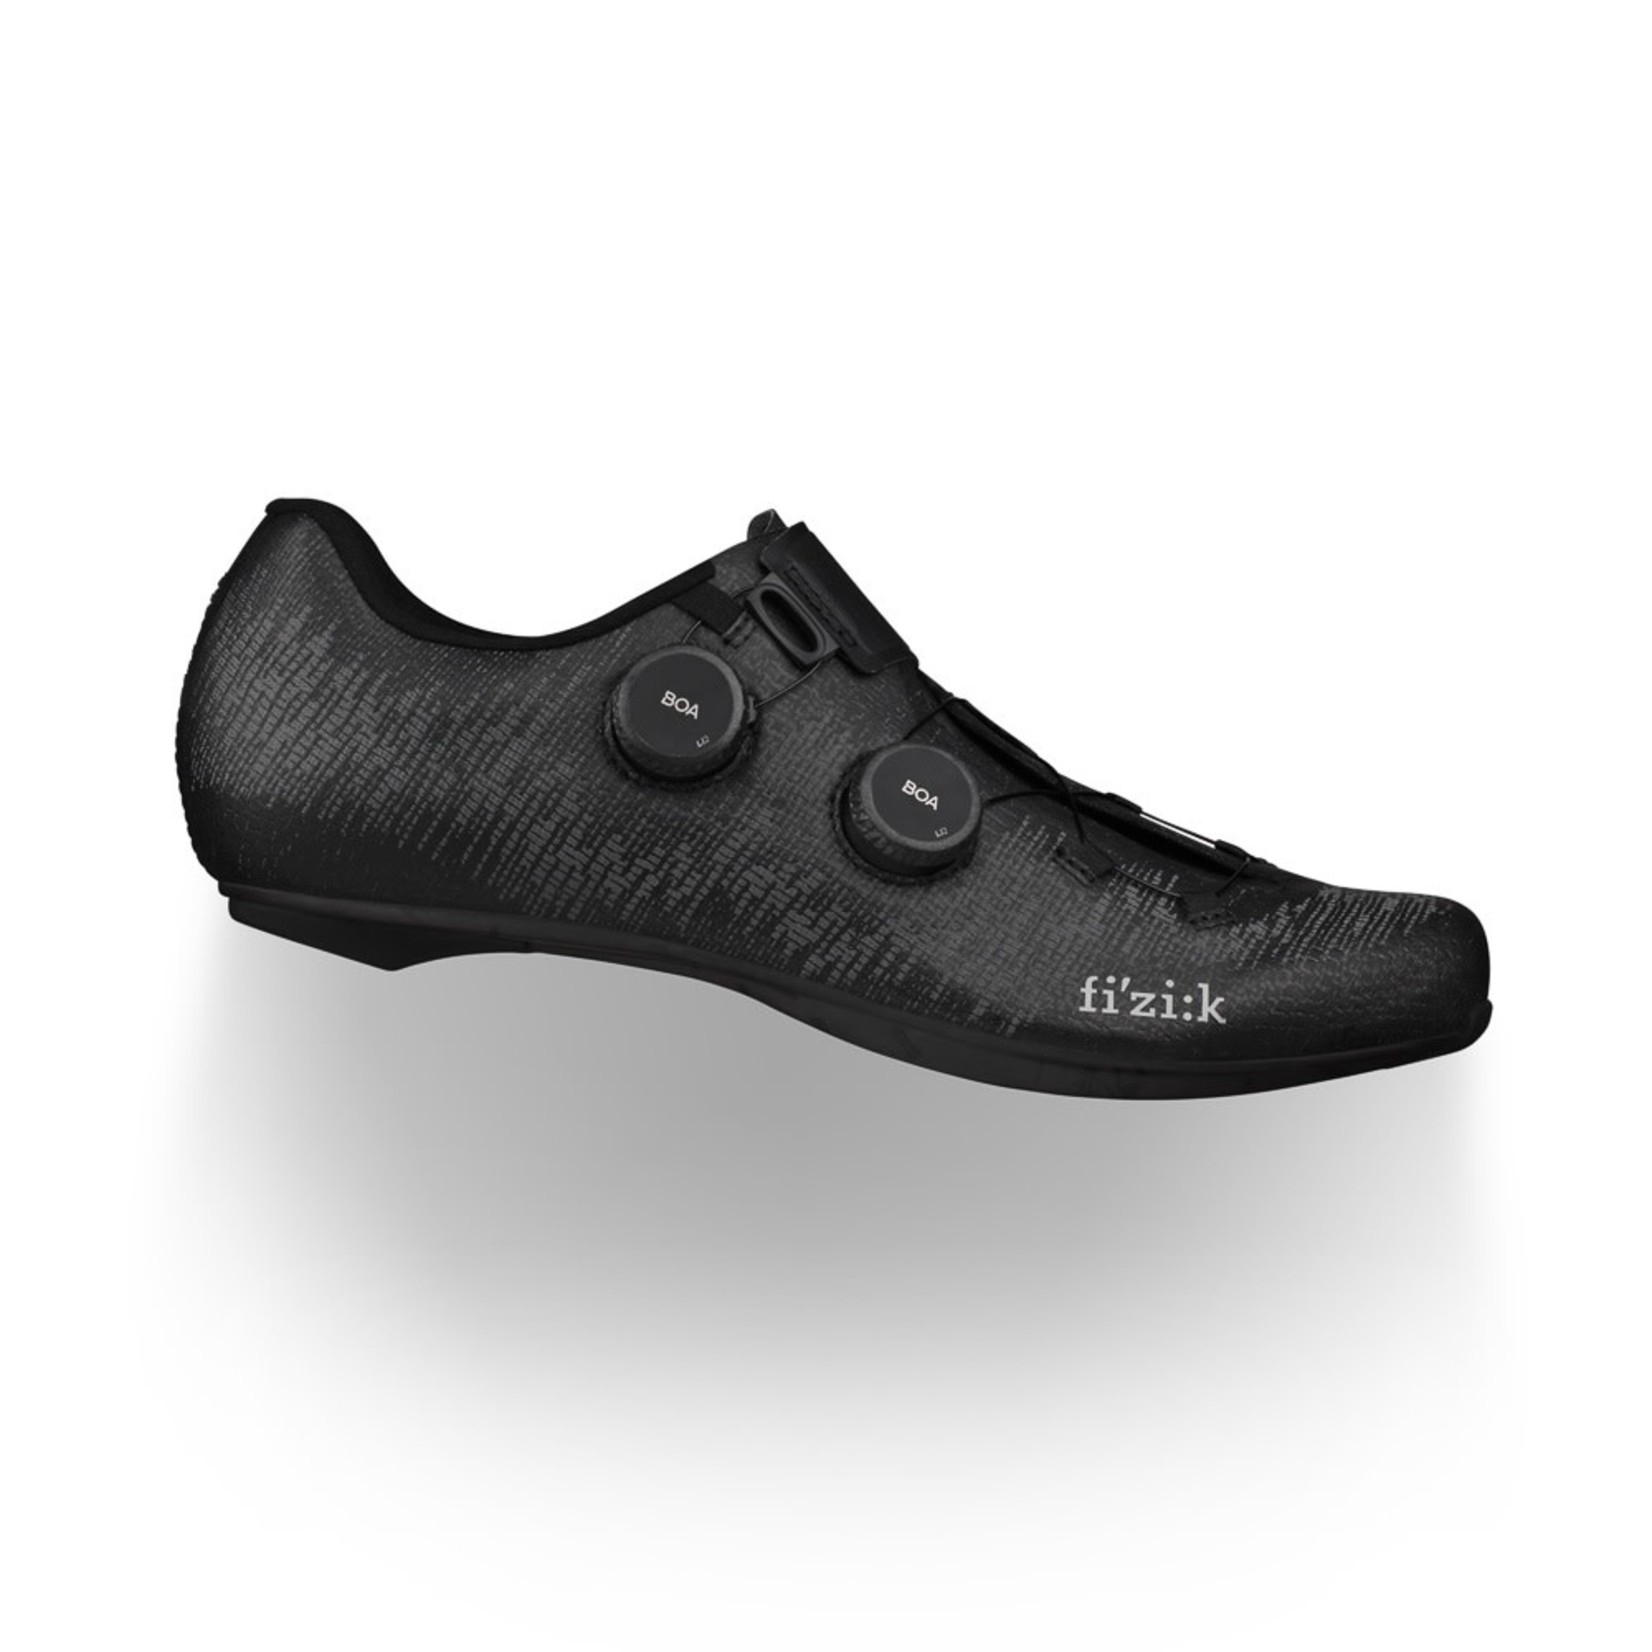 Fizik Fizik Vento Infinito Knit Full Carbon Road Bike/Cycling Shoes - Black/Black